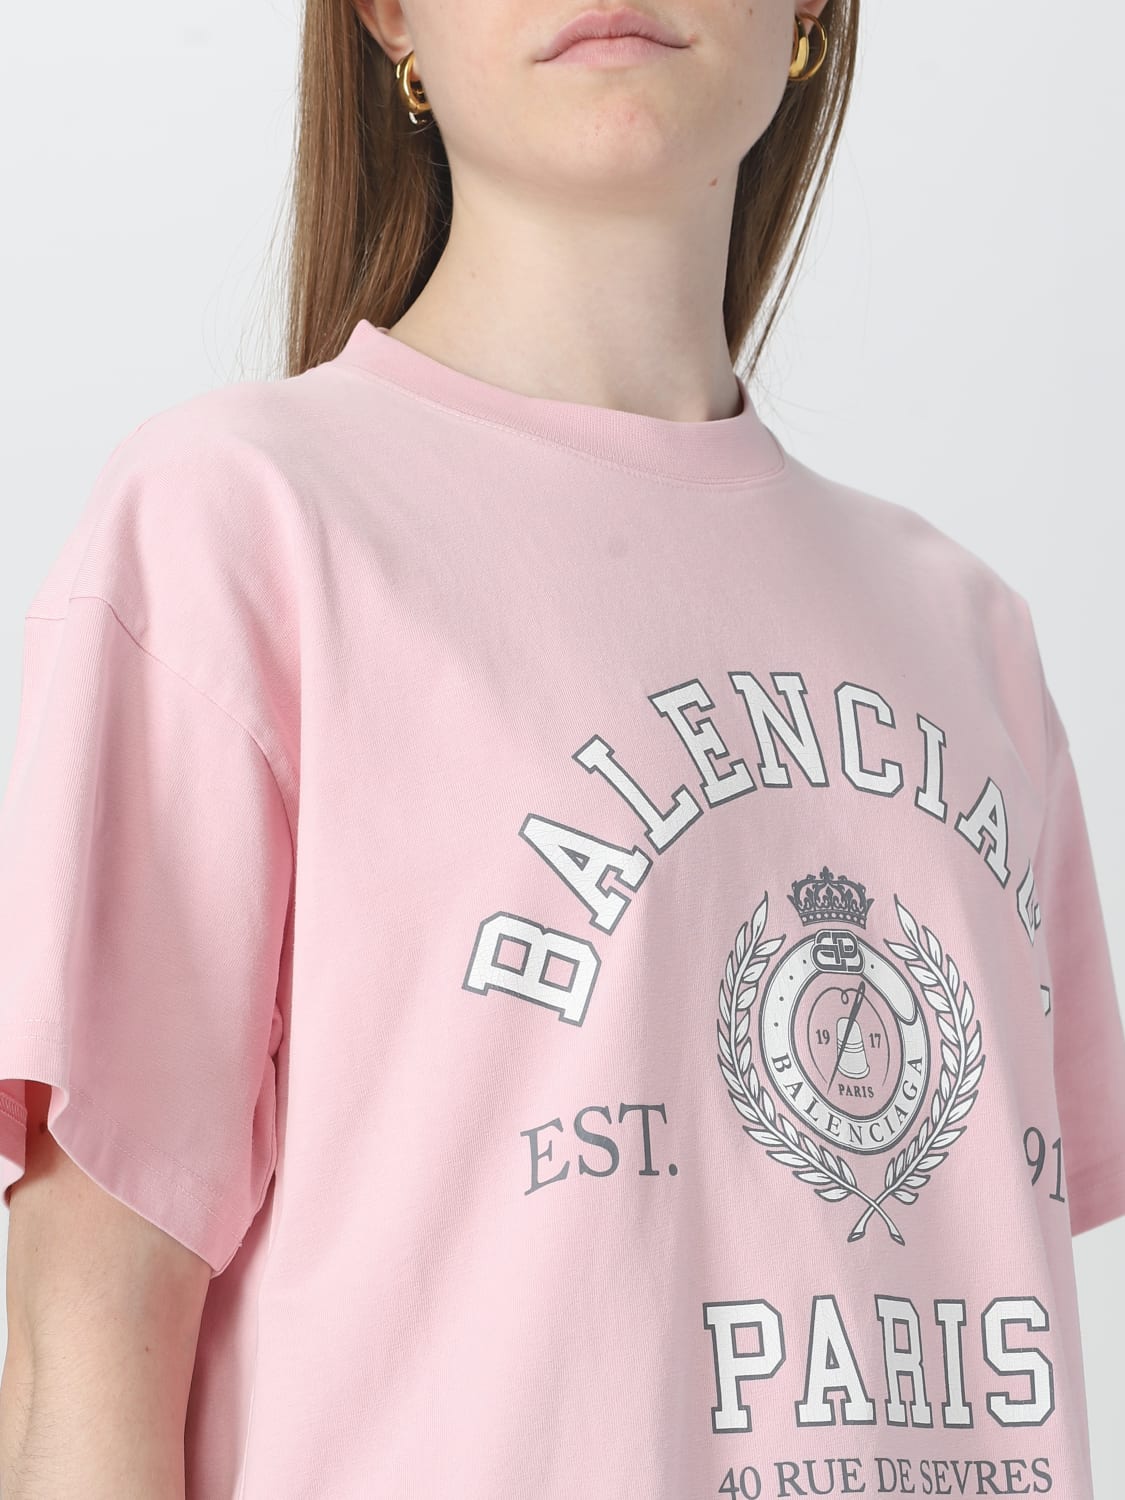 Balenciaga Women's Maison Medium Fit T-Shirt